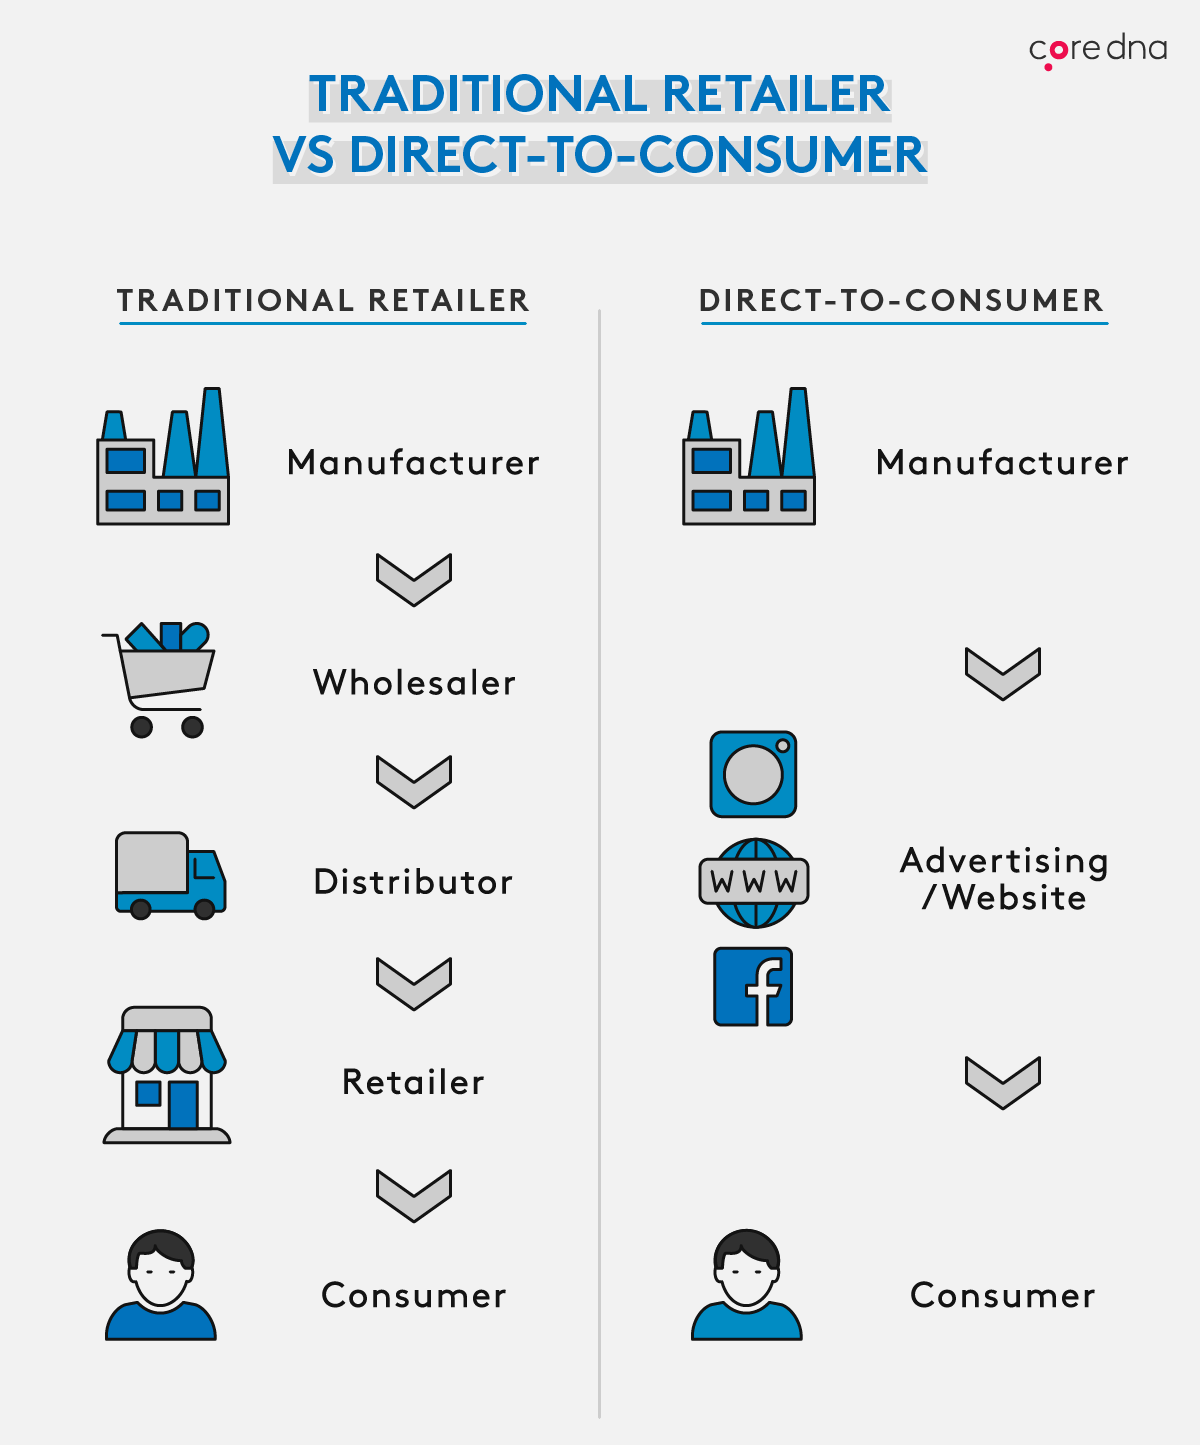 Traditional retailer vs direct-to-consumer retailer